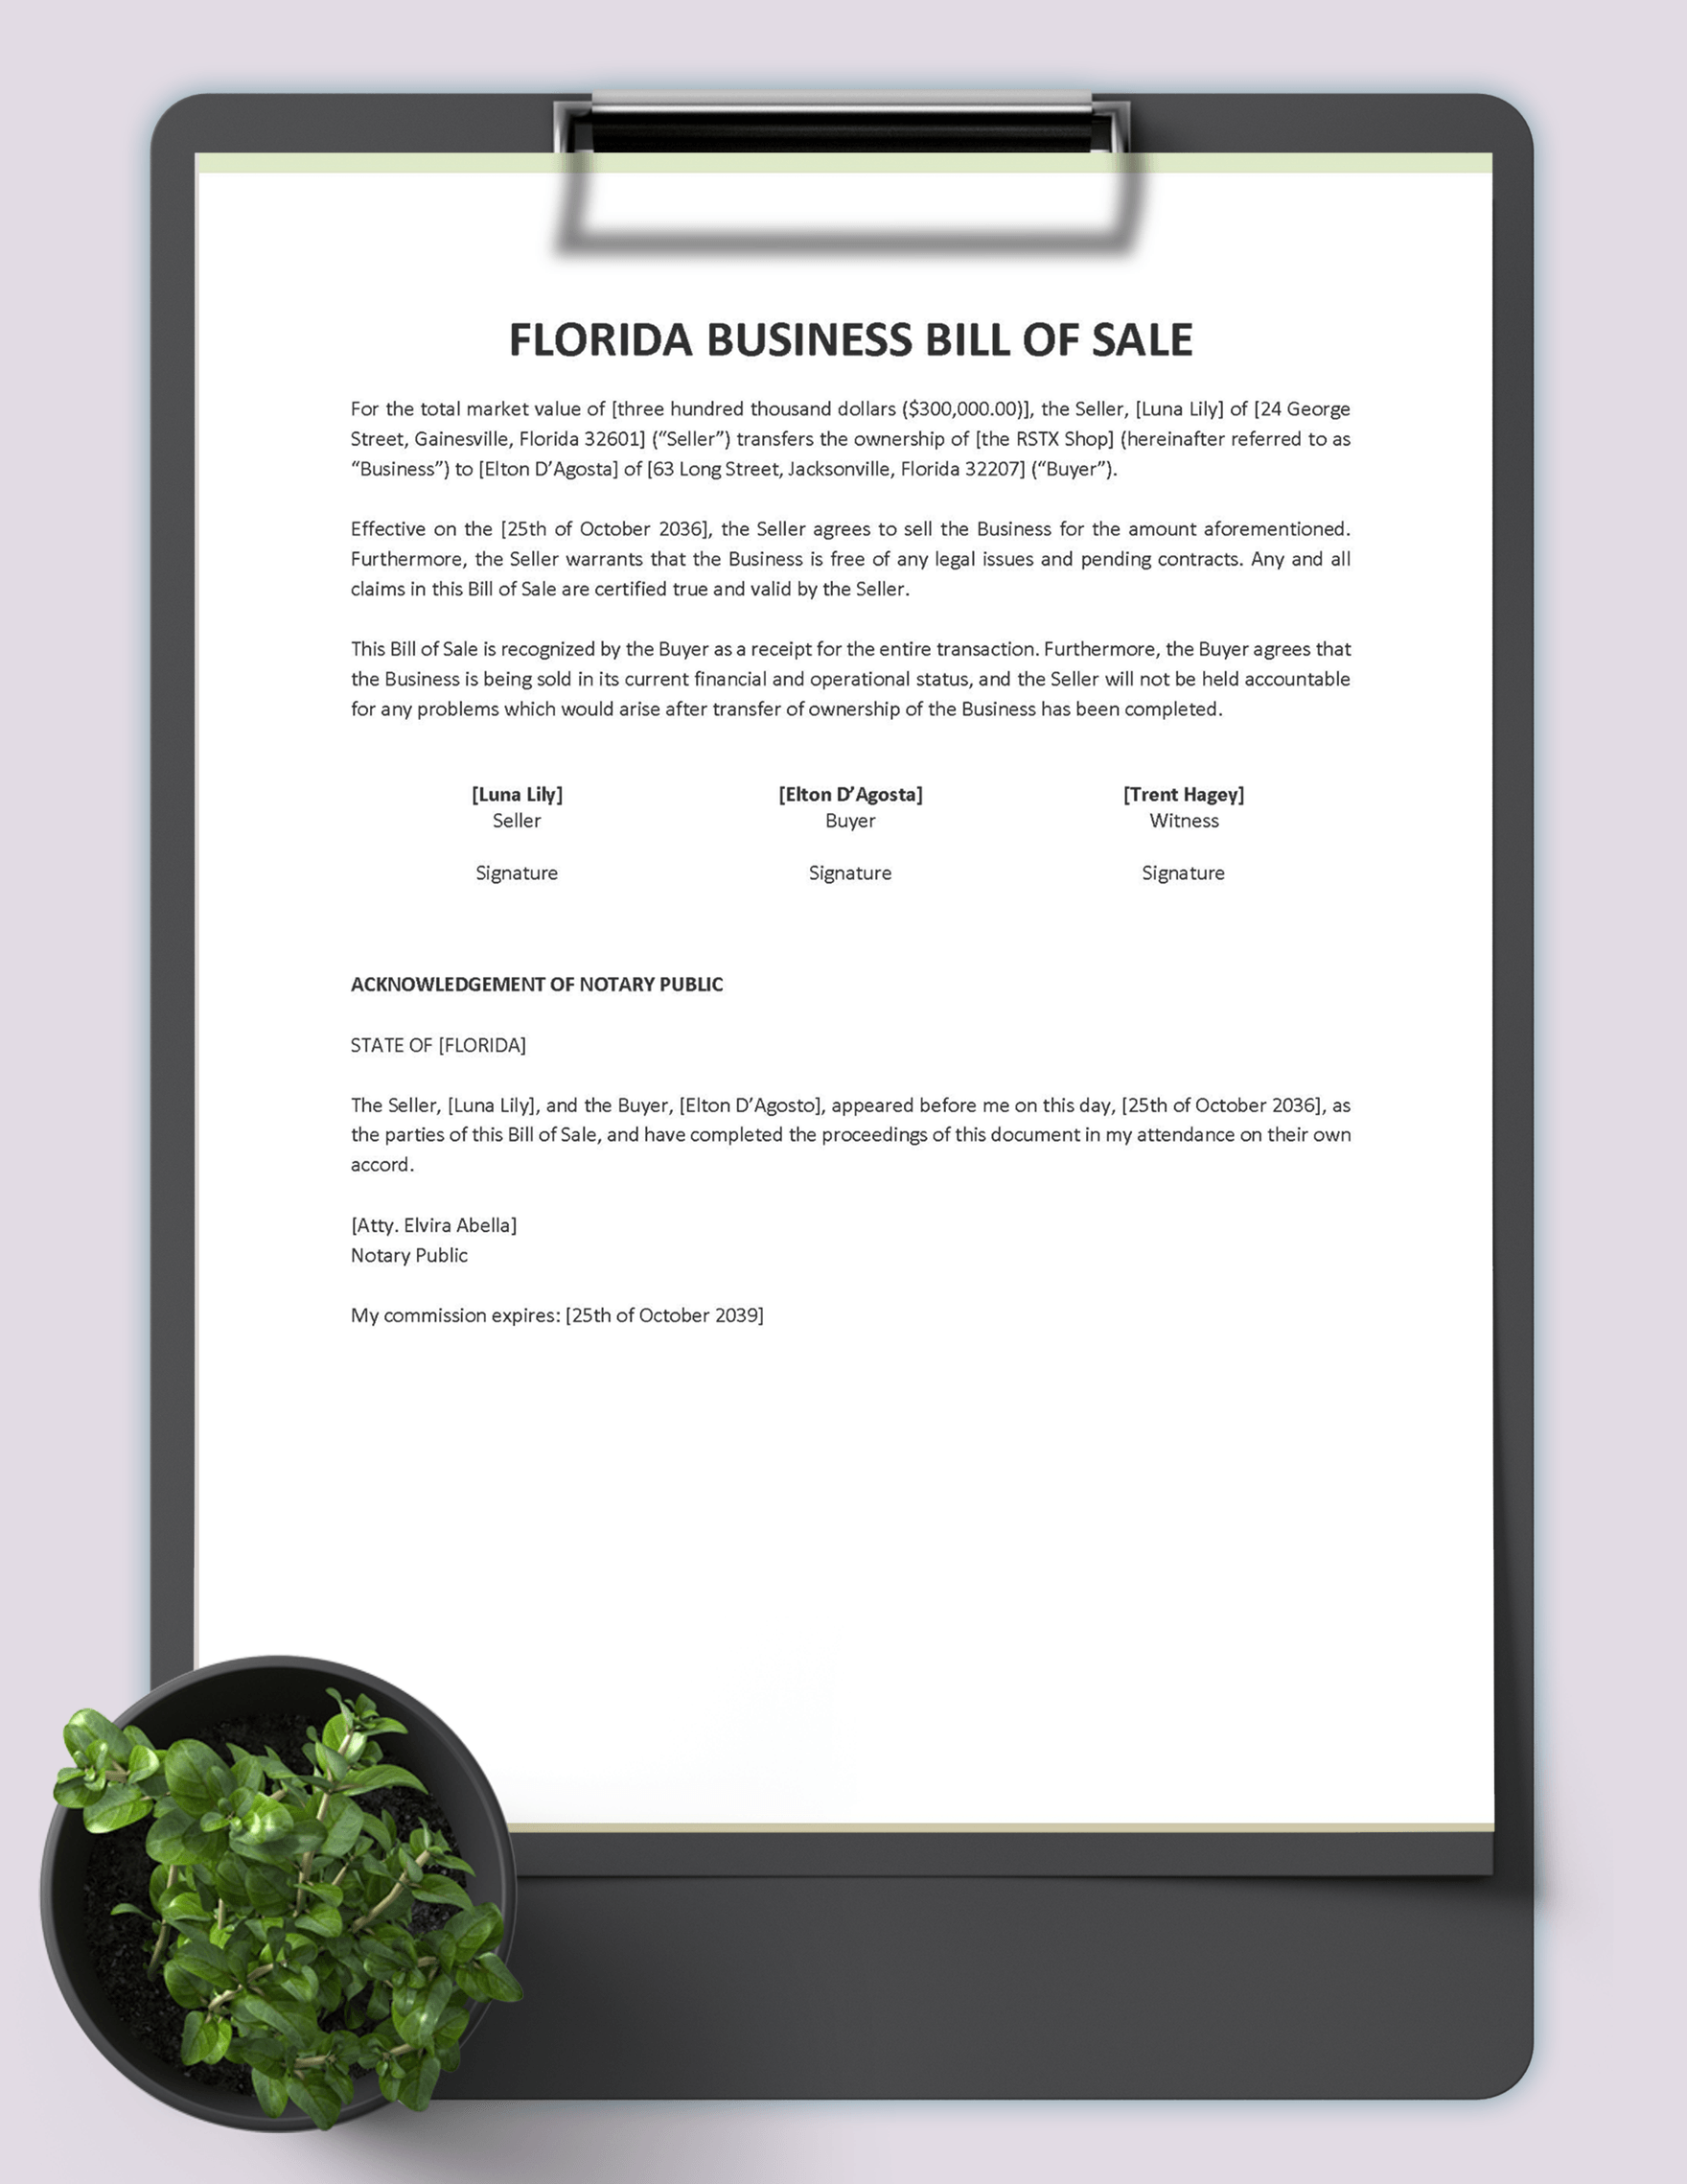 Florida Business Bill of Sale Template